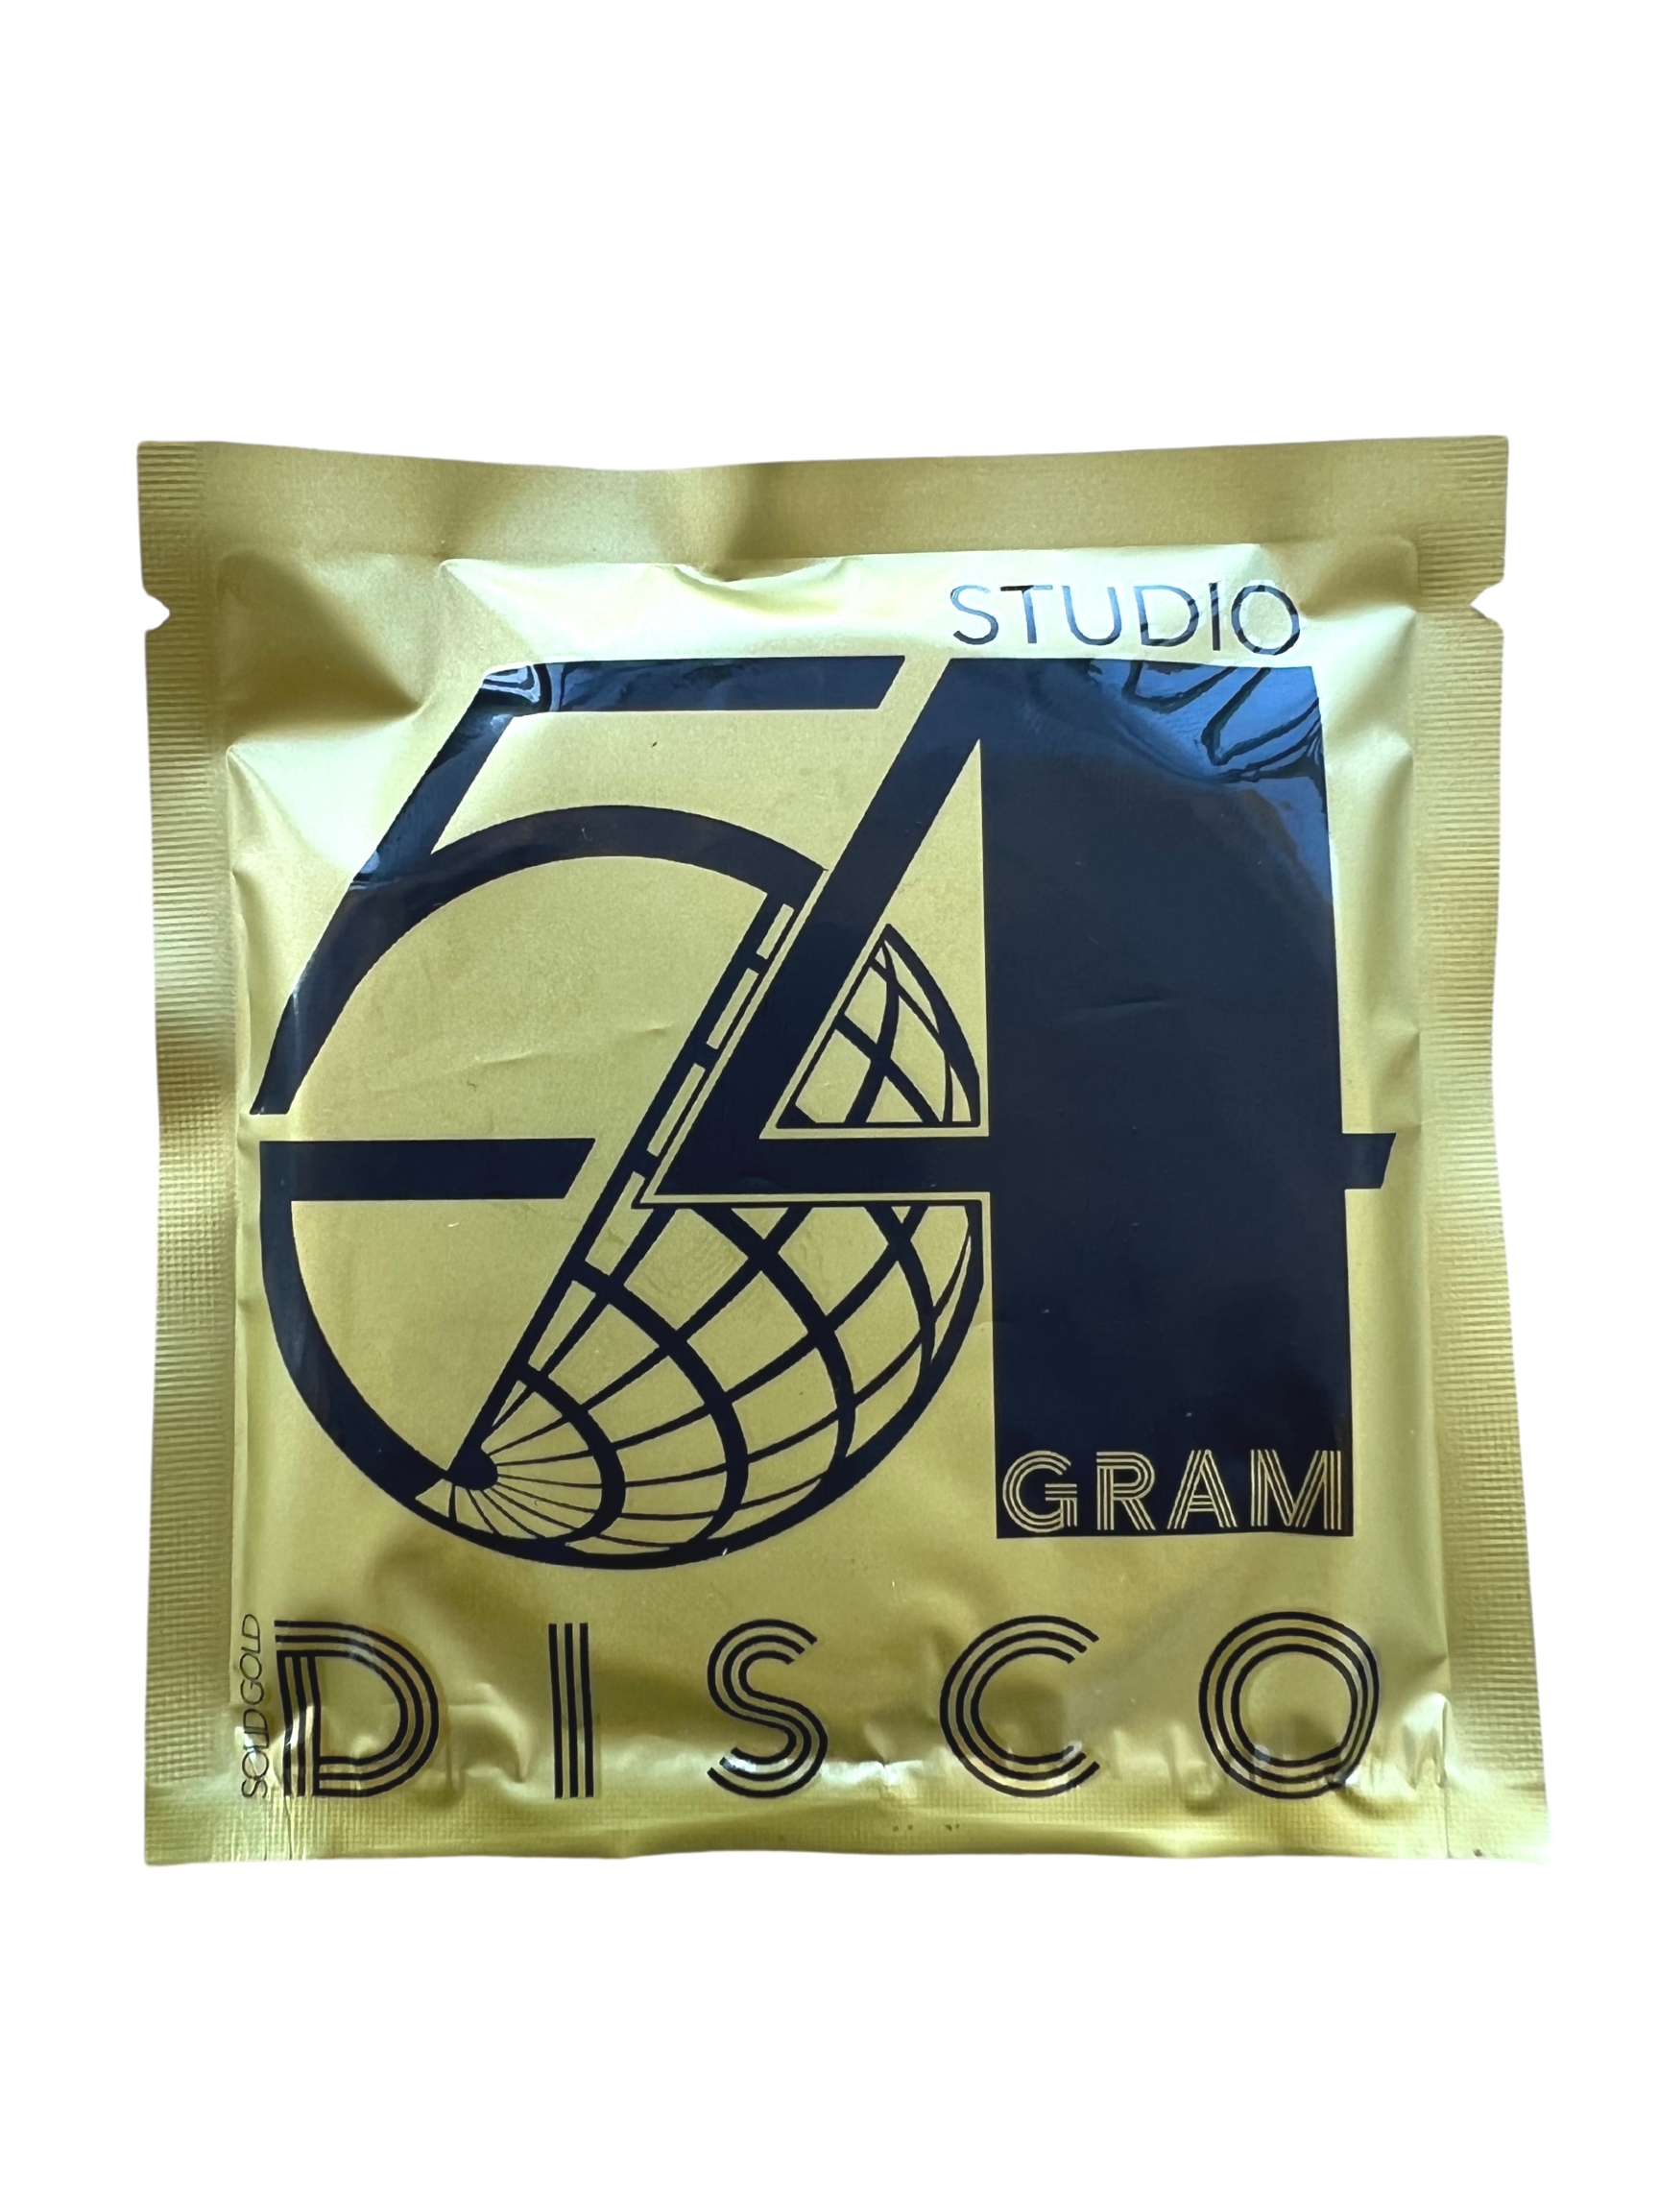 Pin on disco studio 54